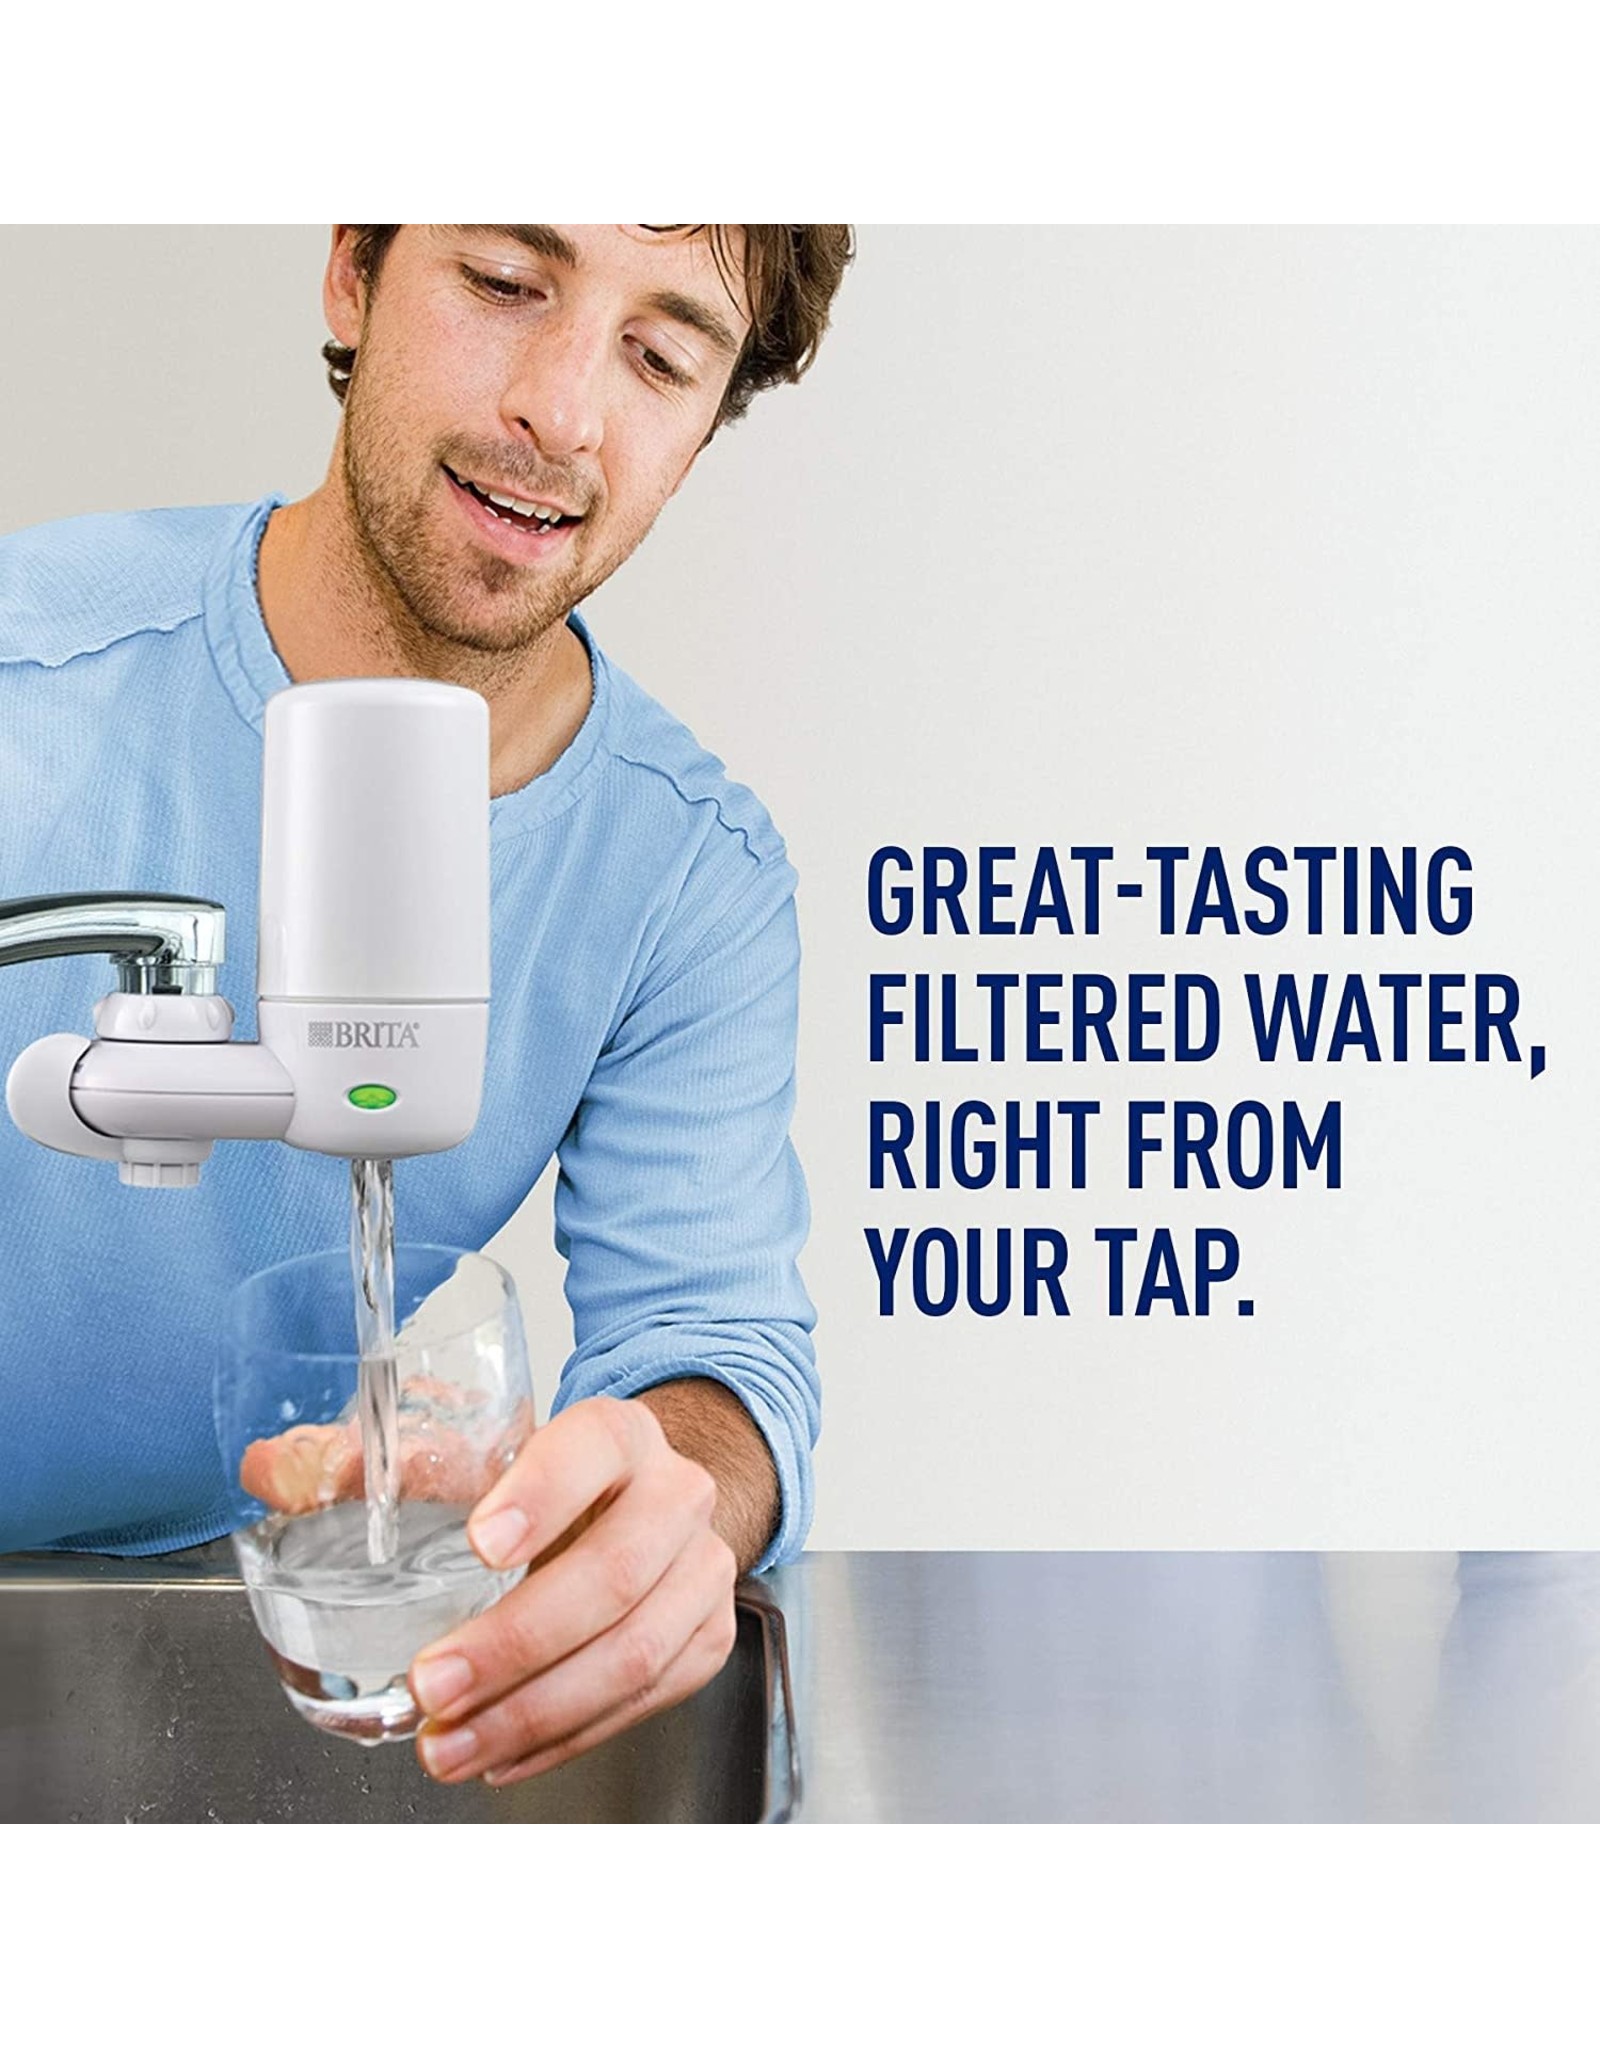 BRITA On Tap Water Filter System